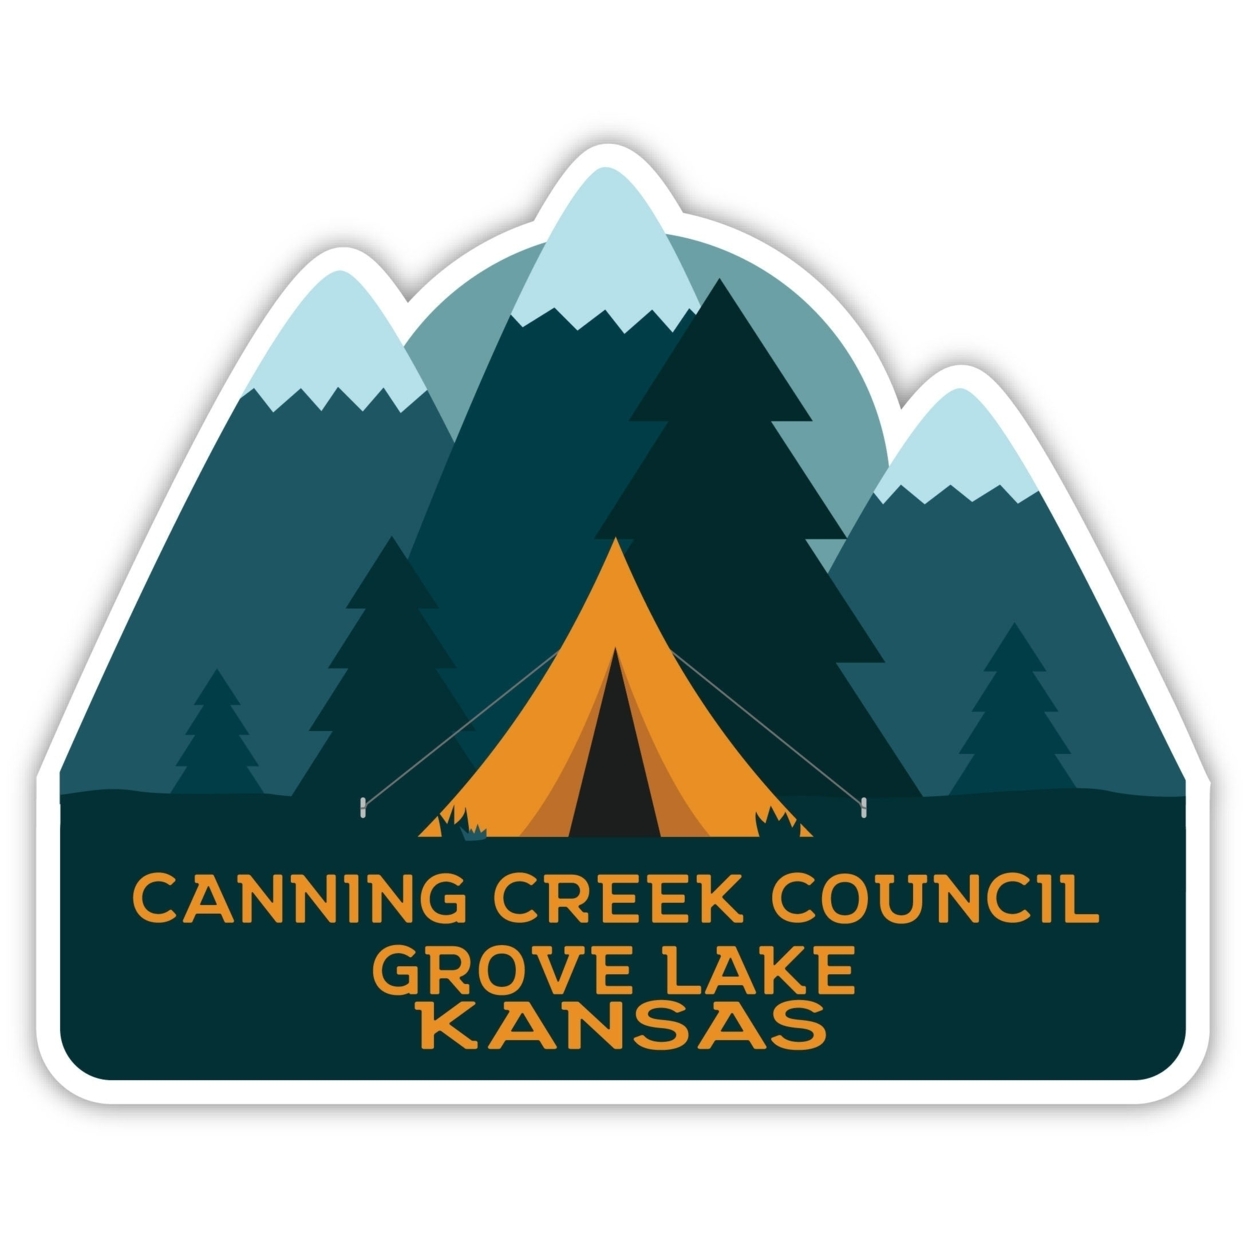 Canning Creek Council Grove Lake Kansas Souvenir Decorative Stickers (Choose Theme And Size) - Single Unit, 10-Inch, Tent